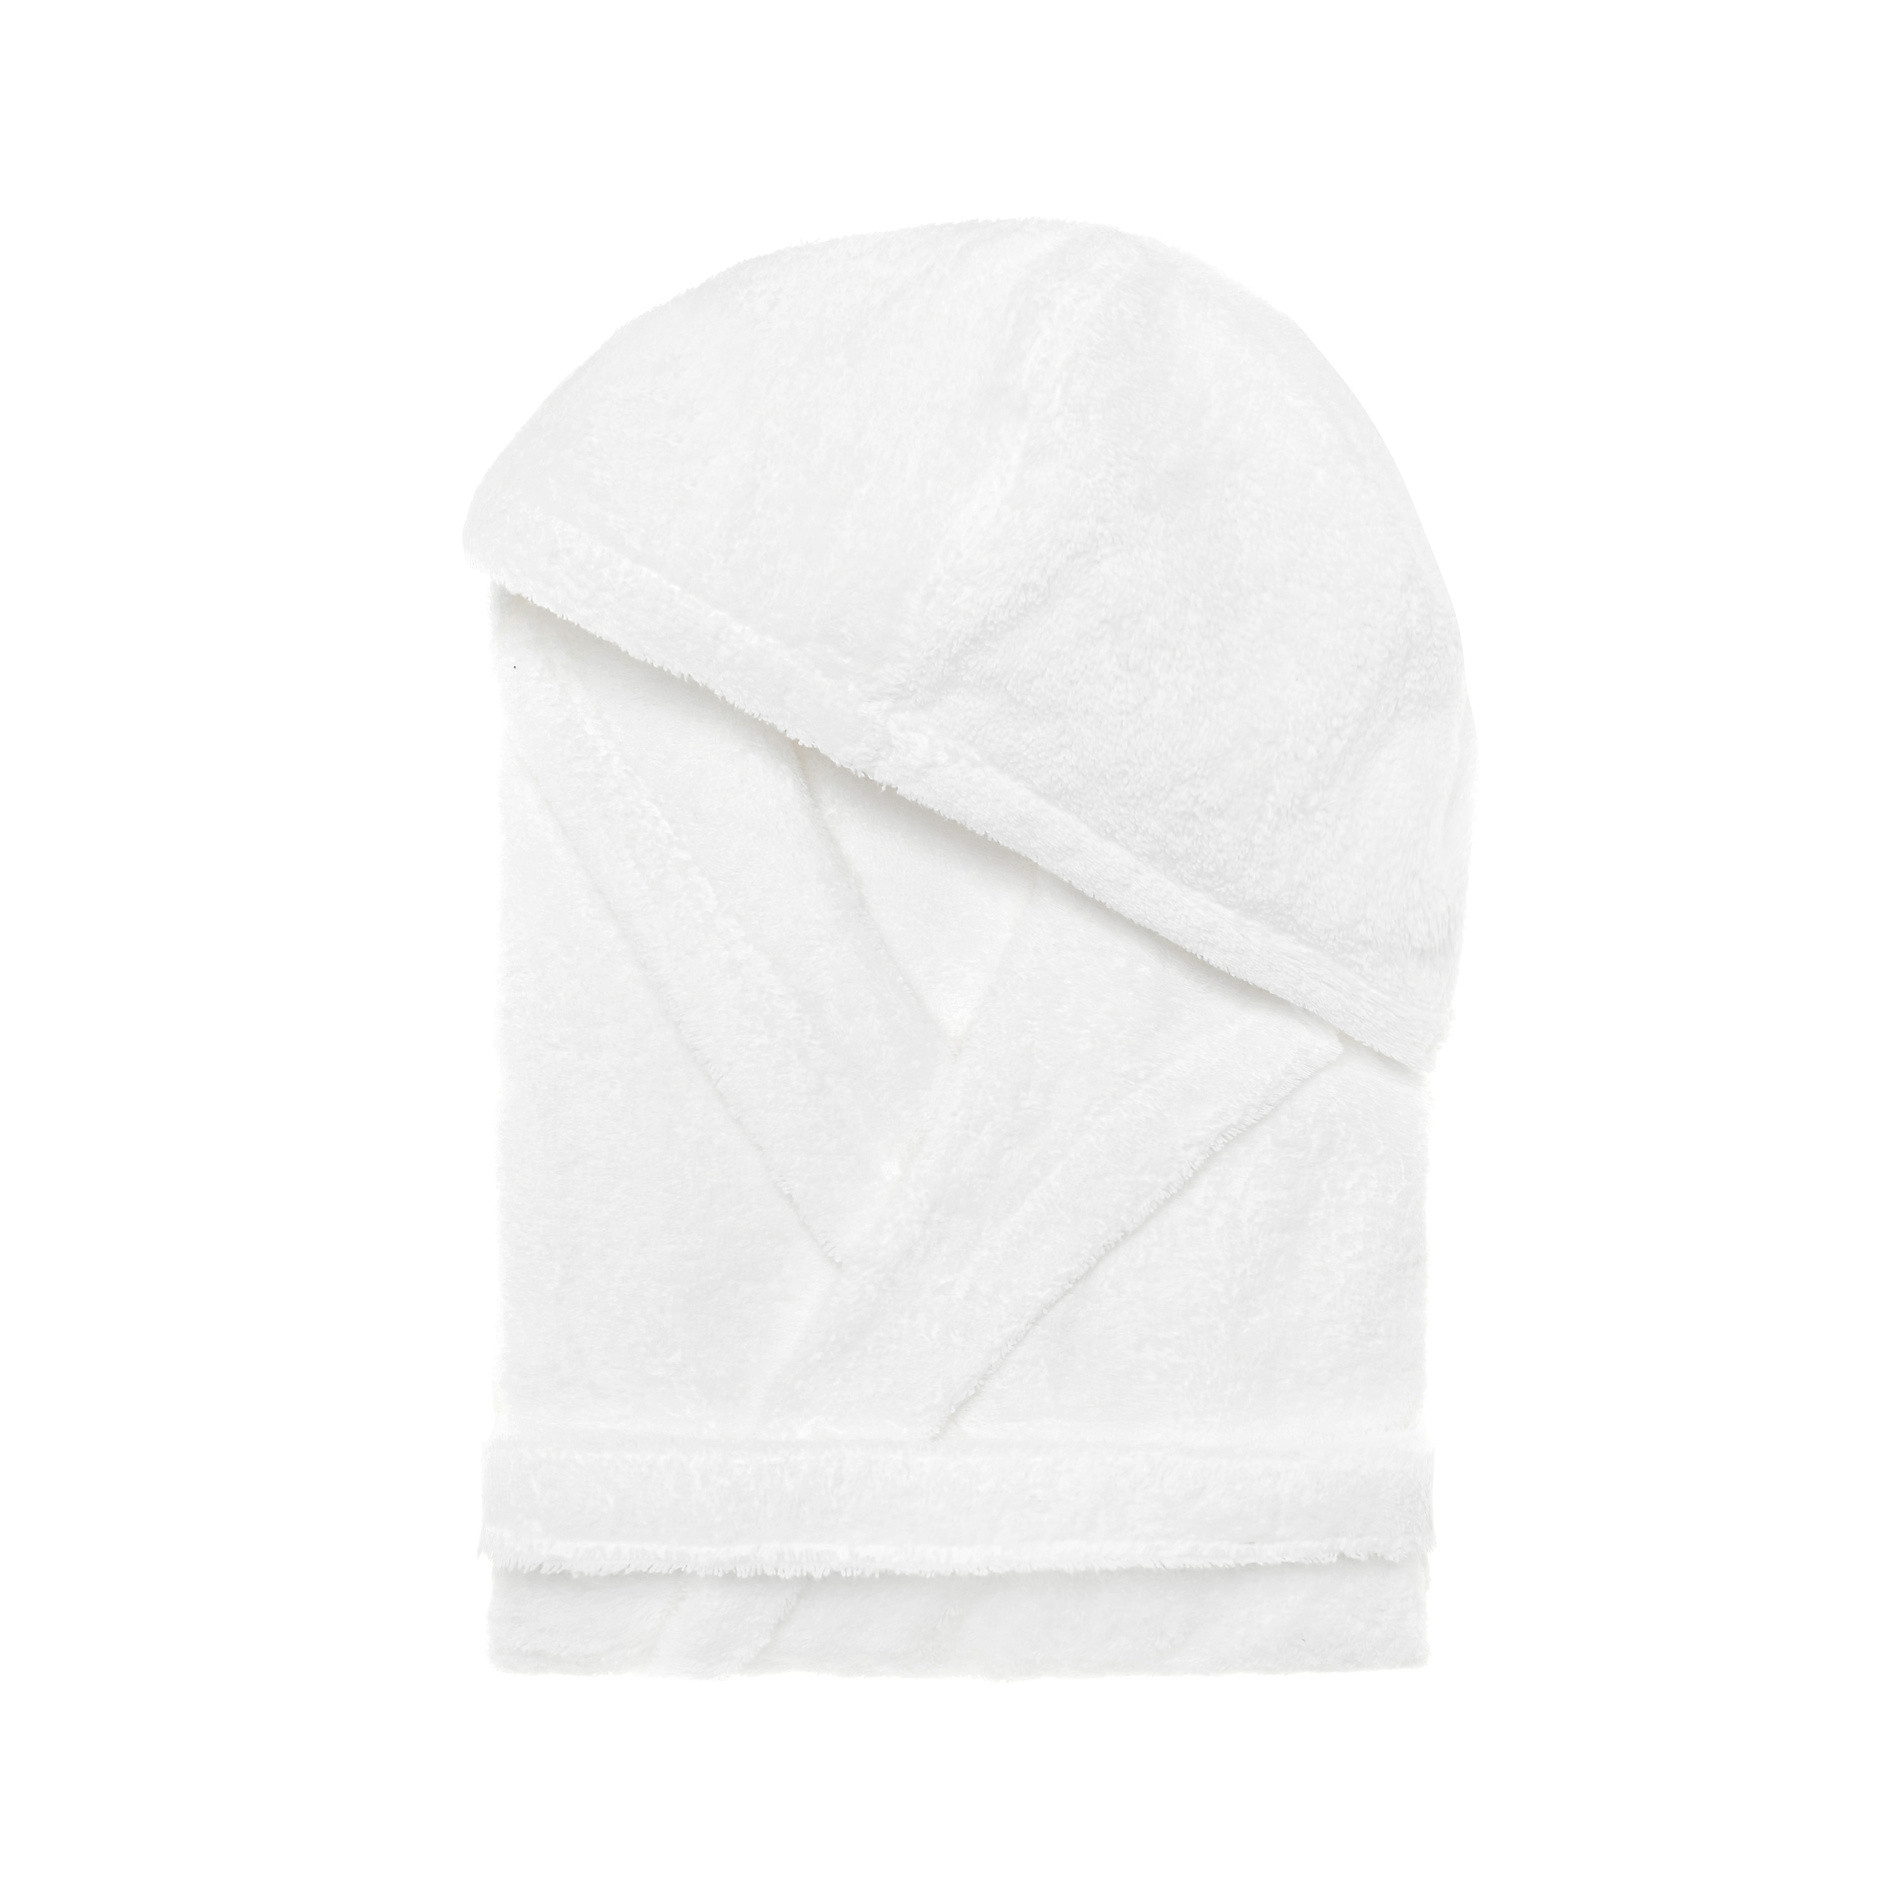 Zefiro cotton terry bathrobe, White, large image number 0